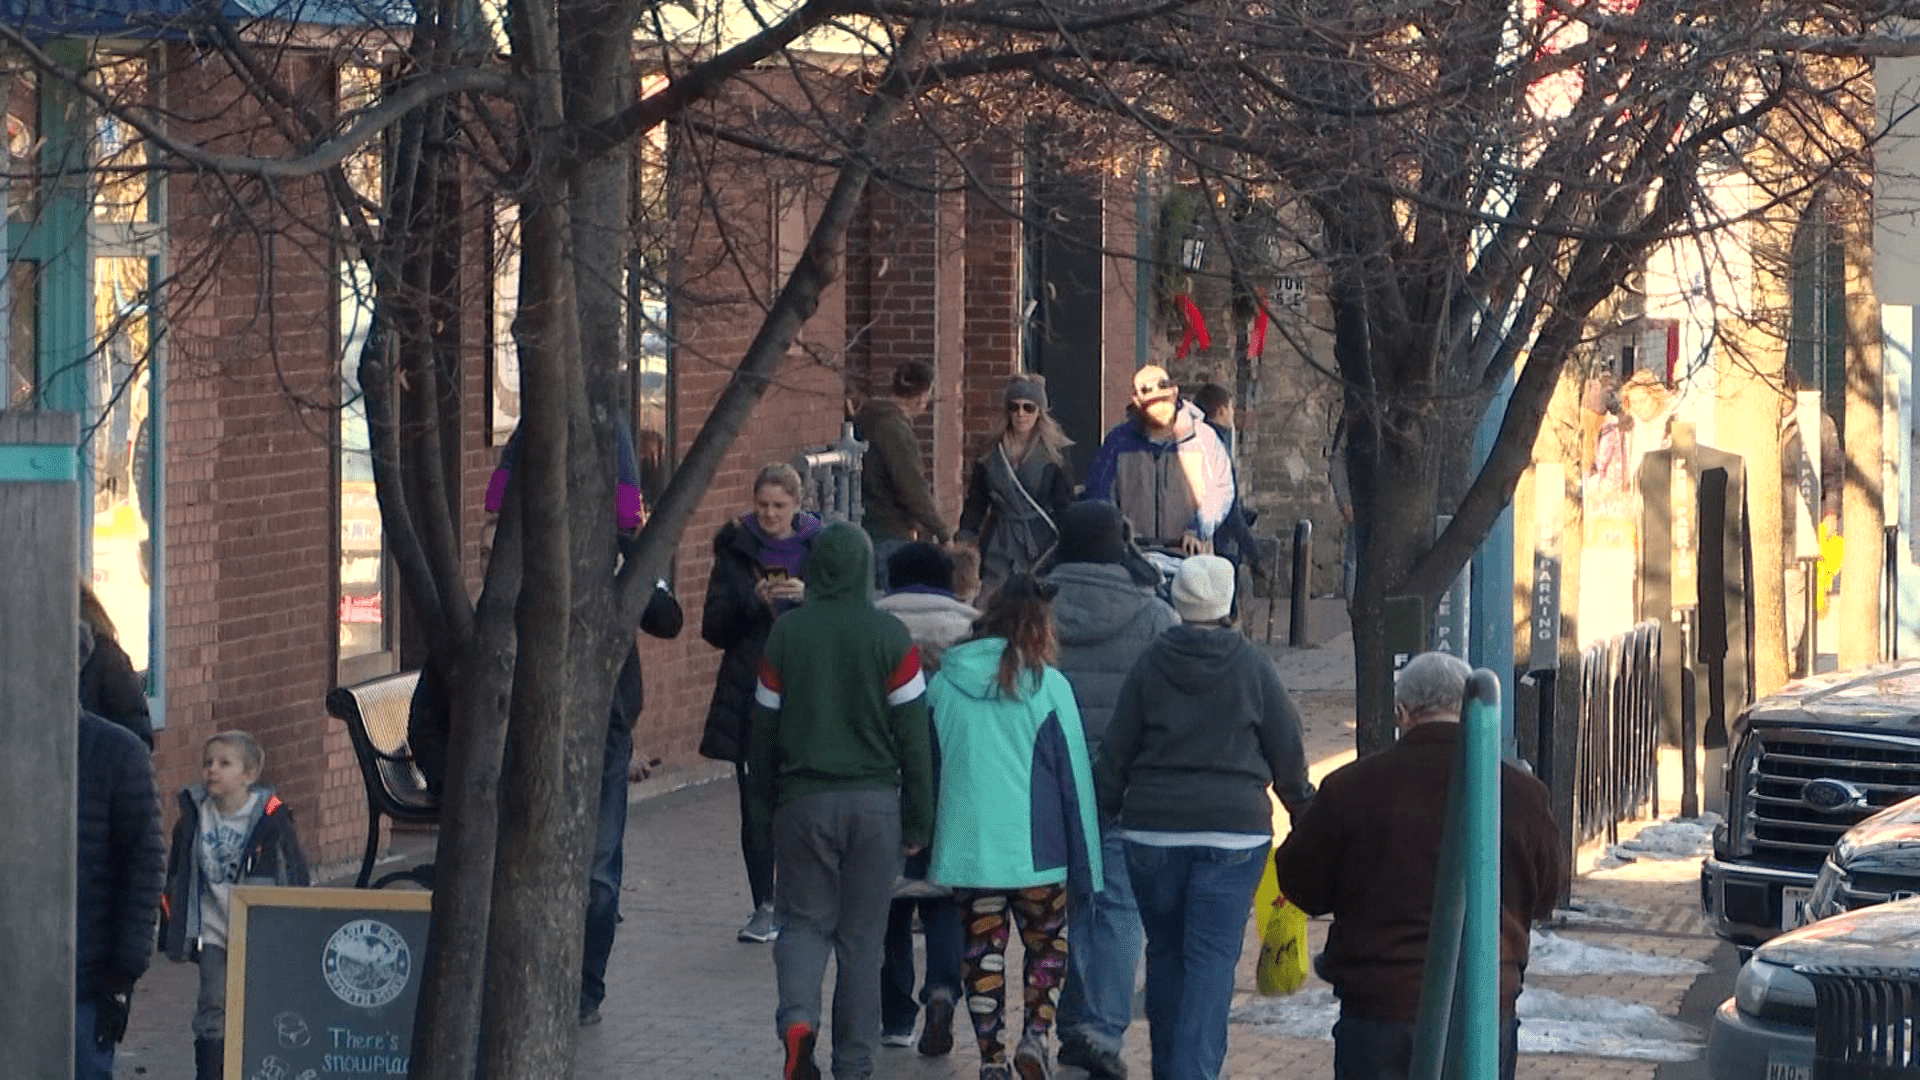 People walking on the sidewalk in Canal Park